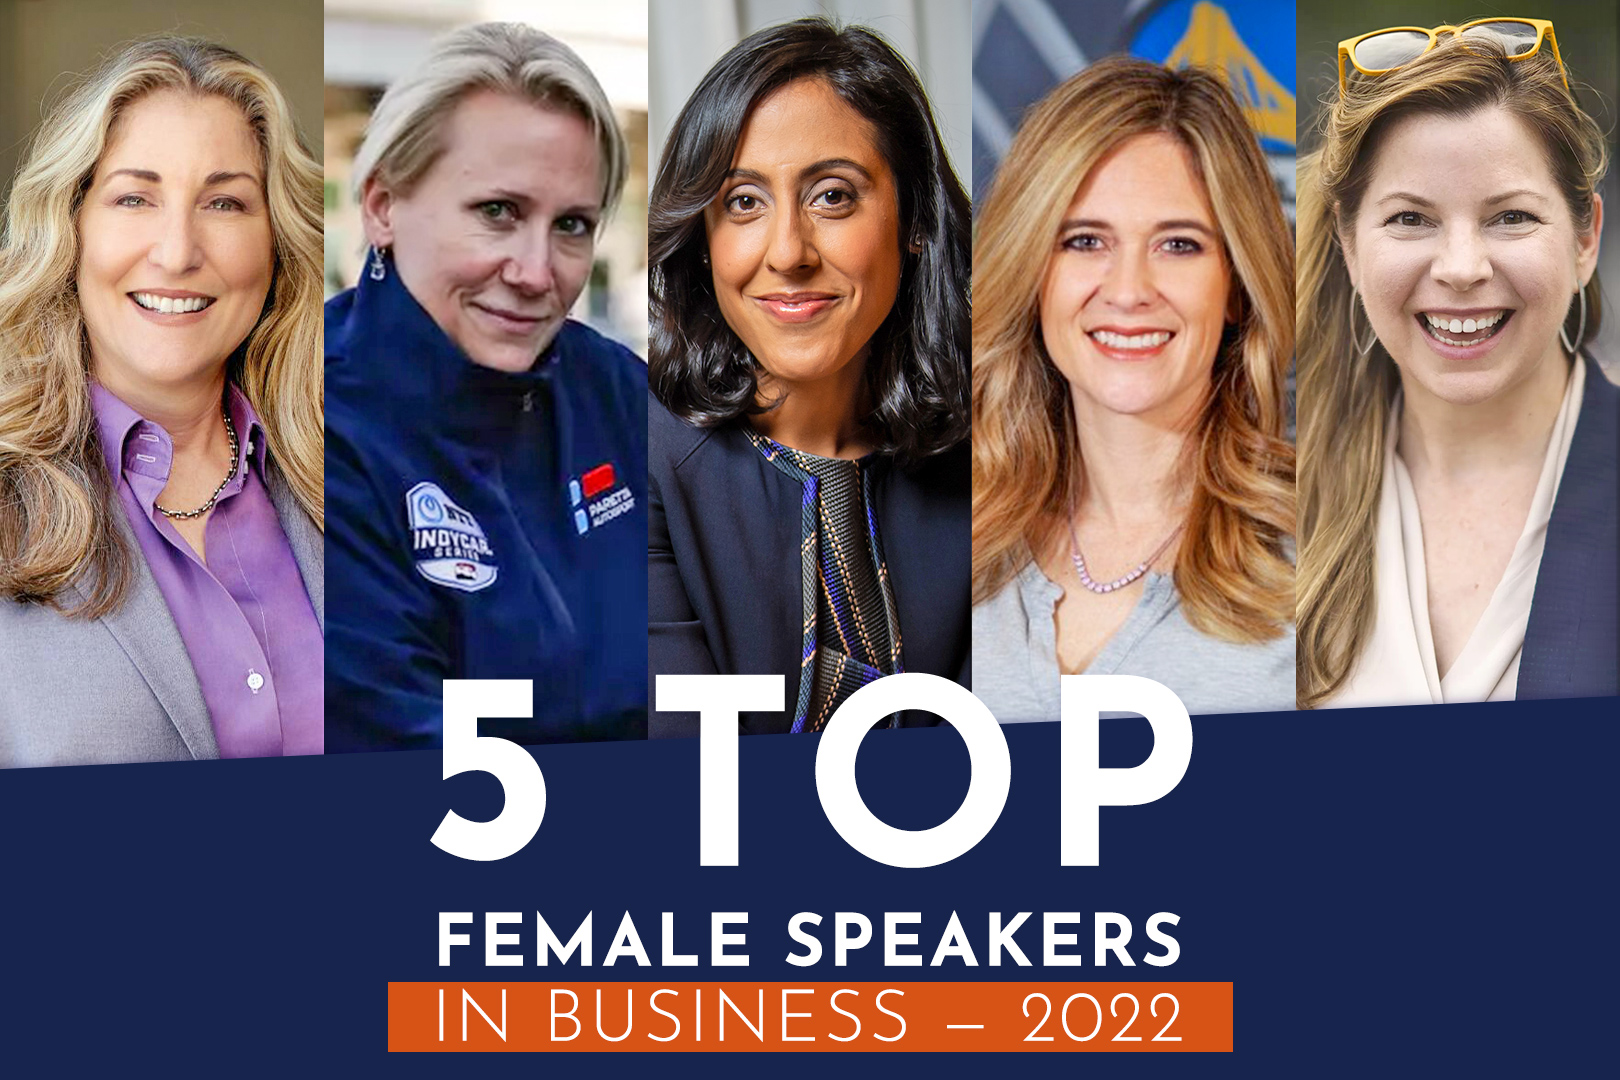 Top 5 female speakers in business 2022